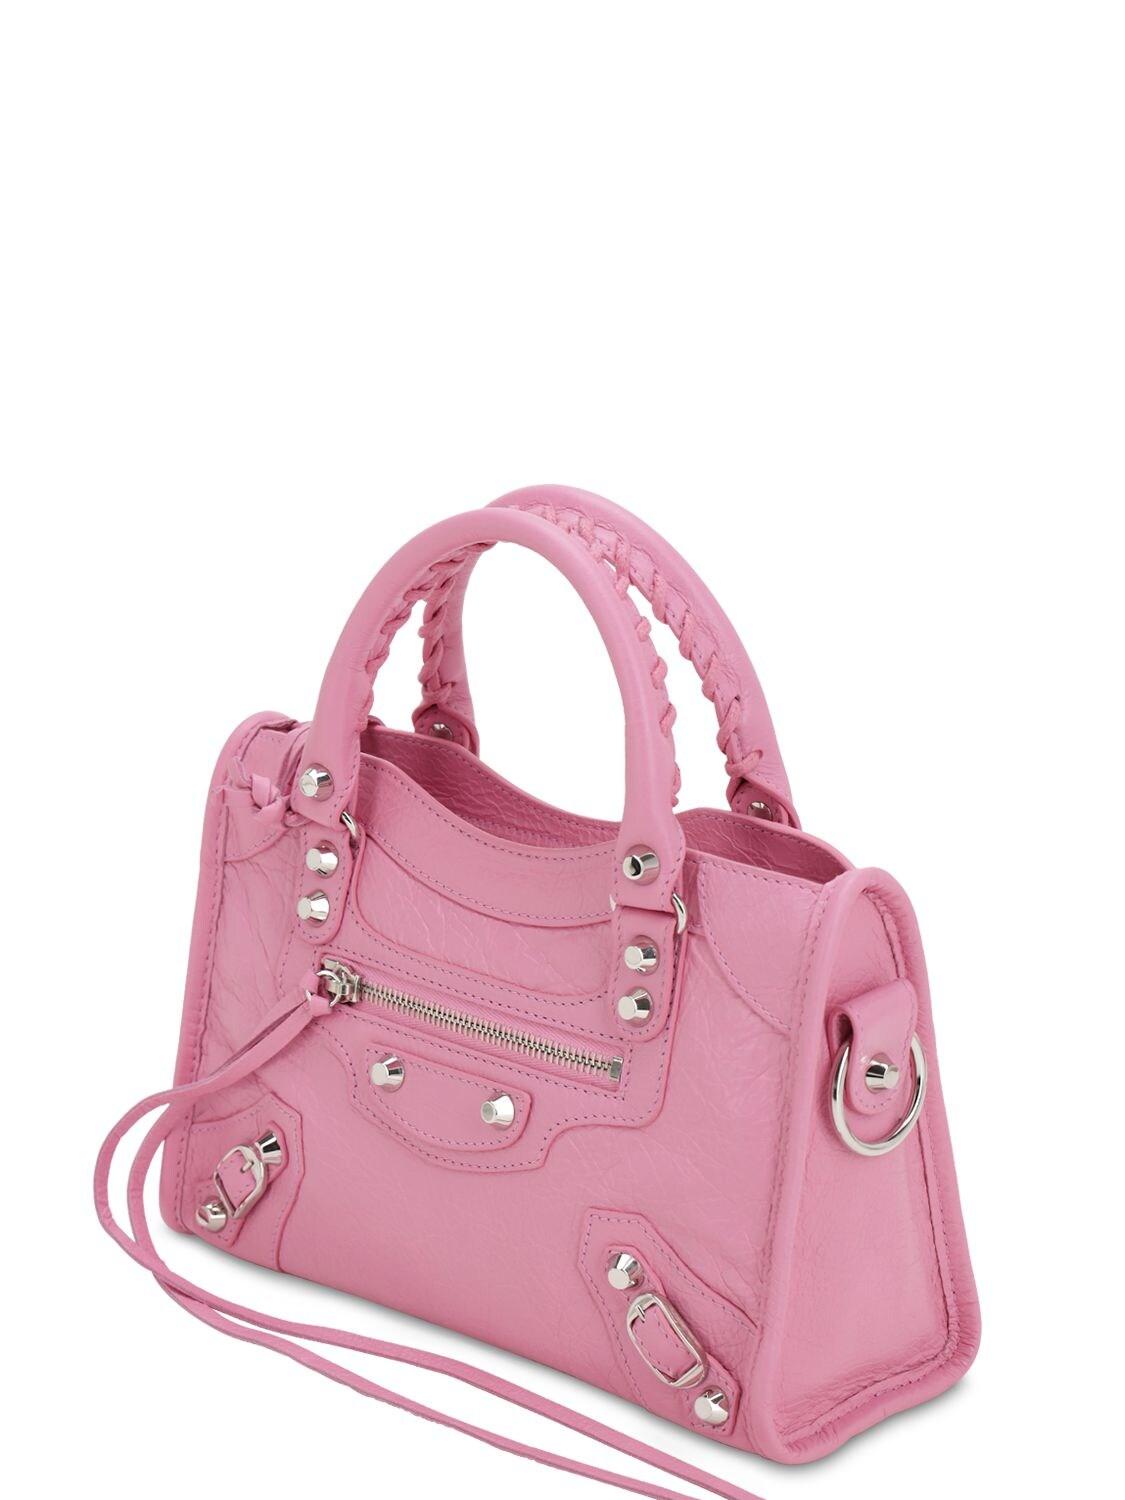 Balenciaga Mini City Leather Strap Logo Bag in Pink - Lyst